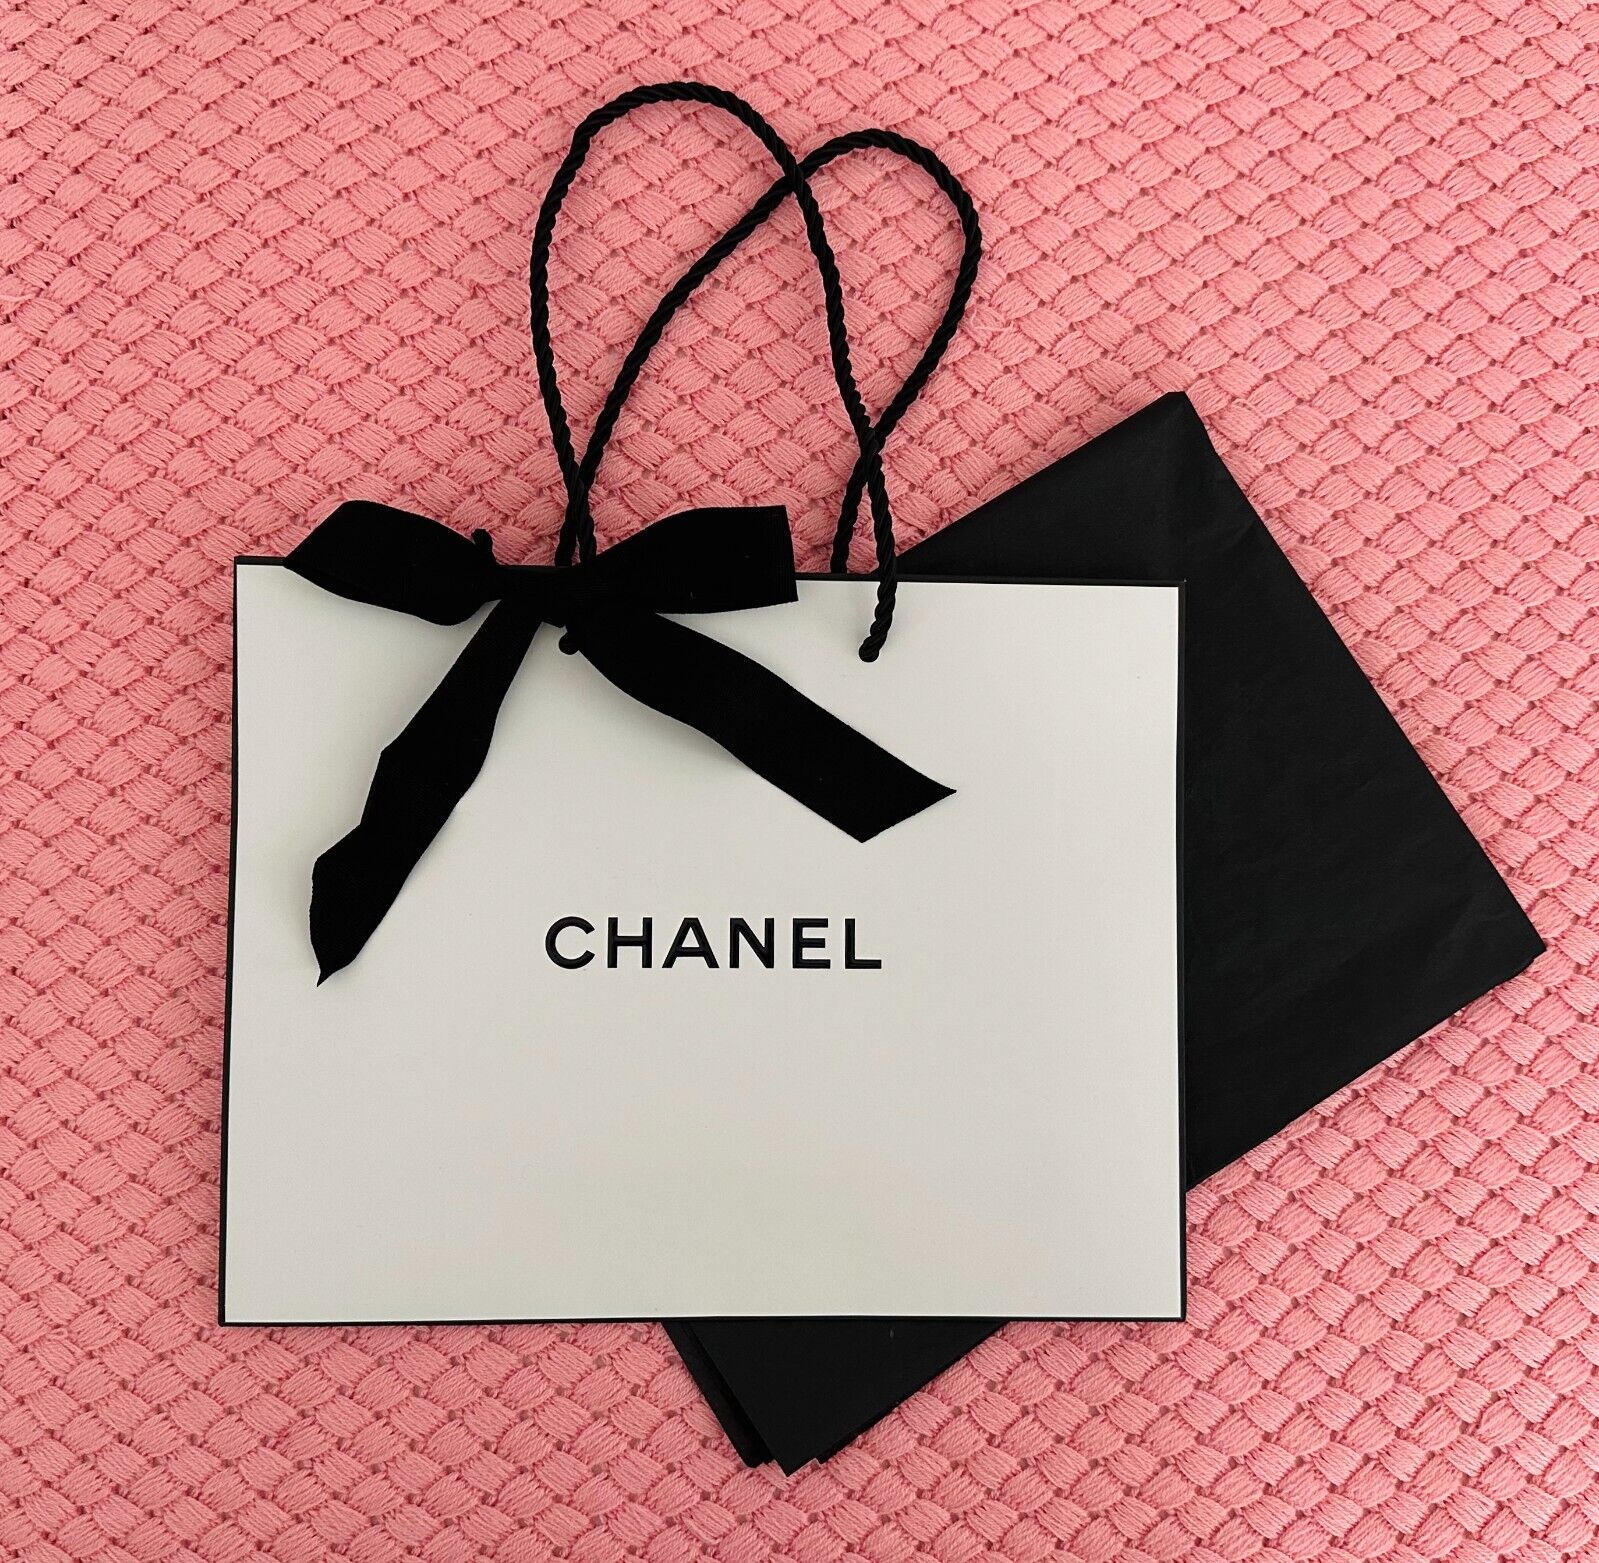 Chanel paper bag with - Gem